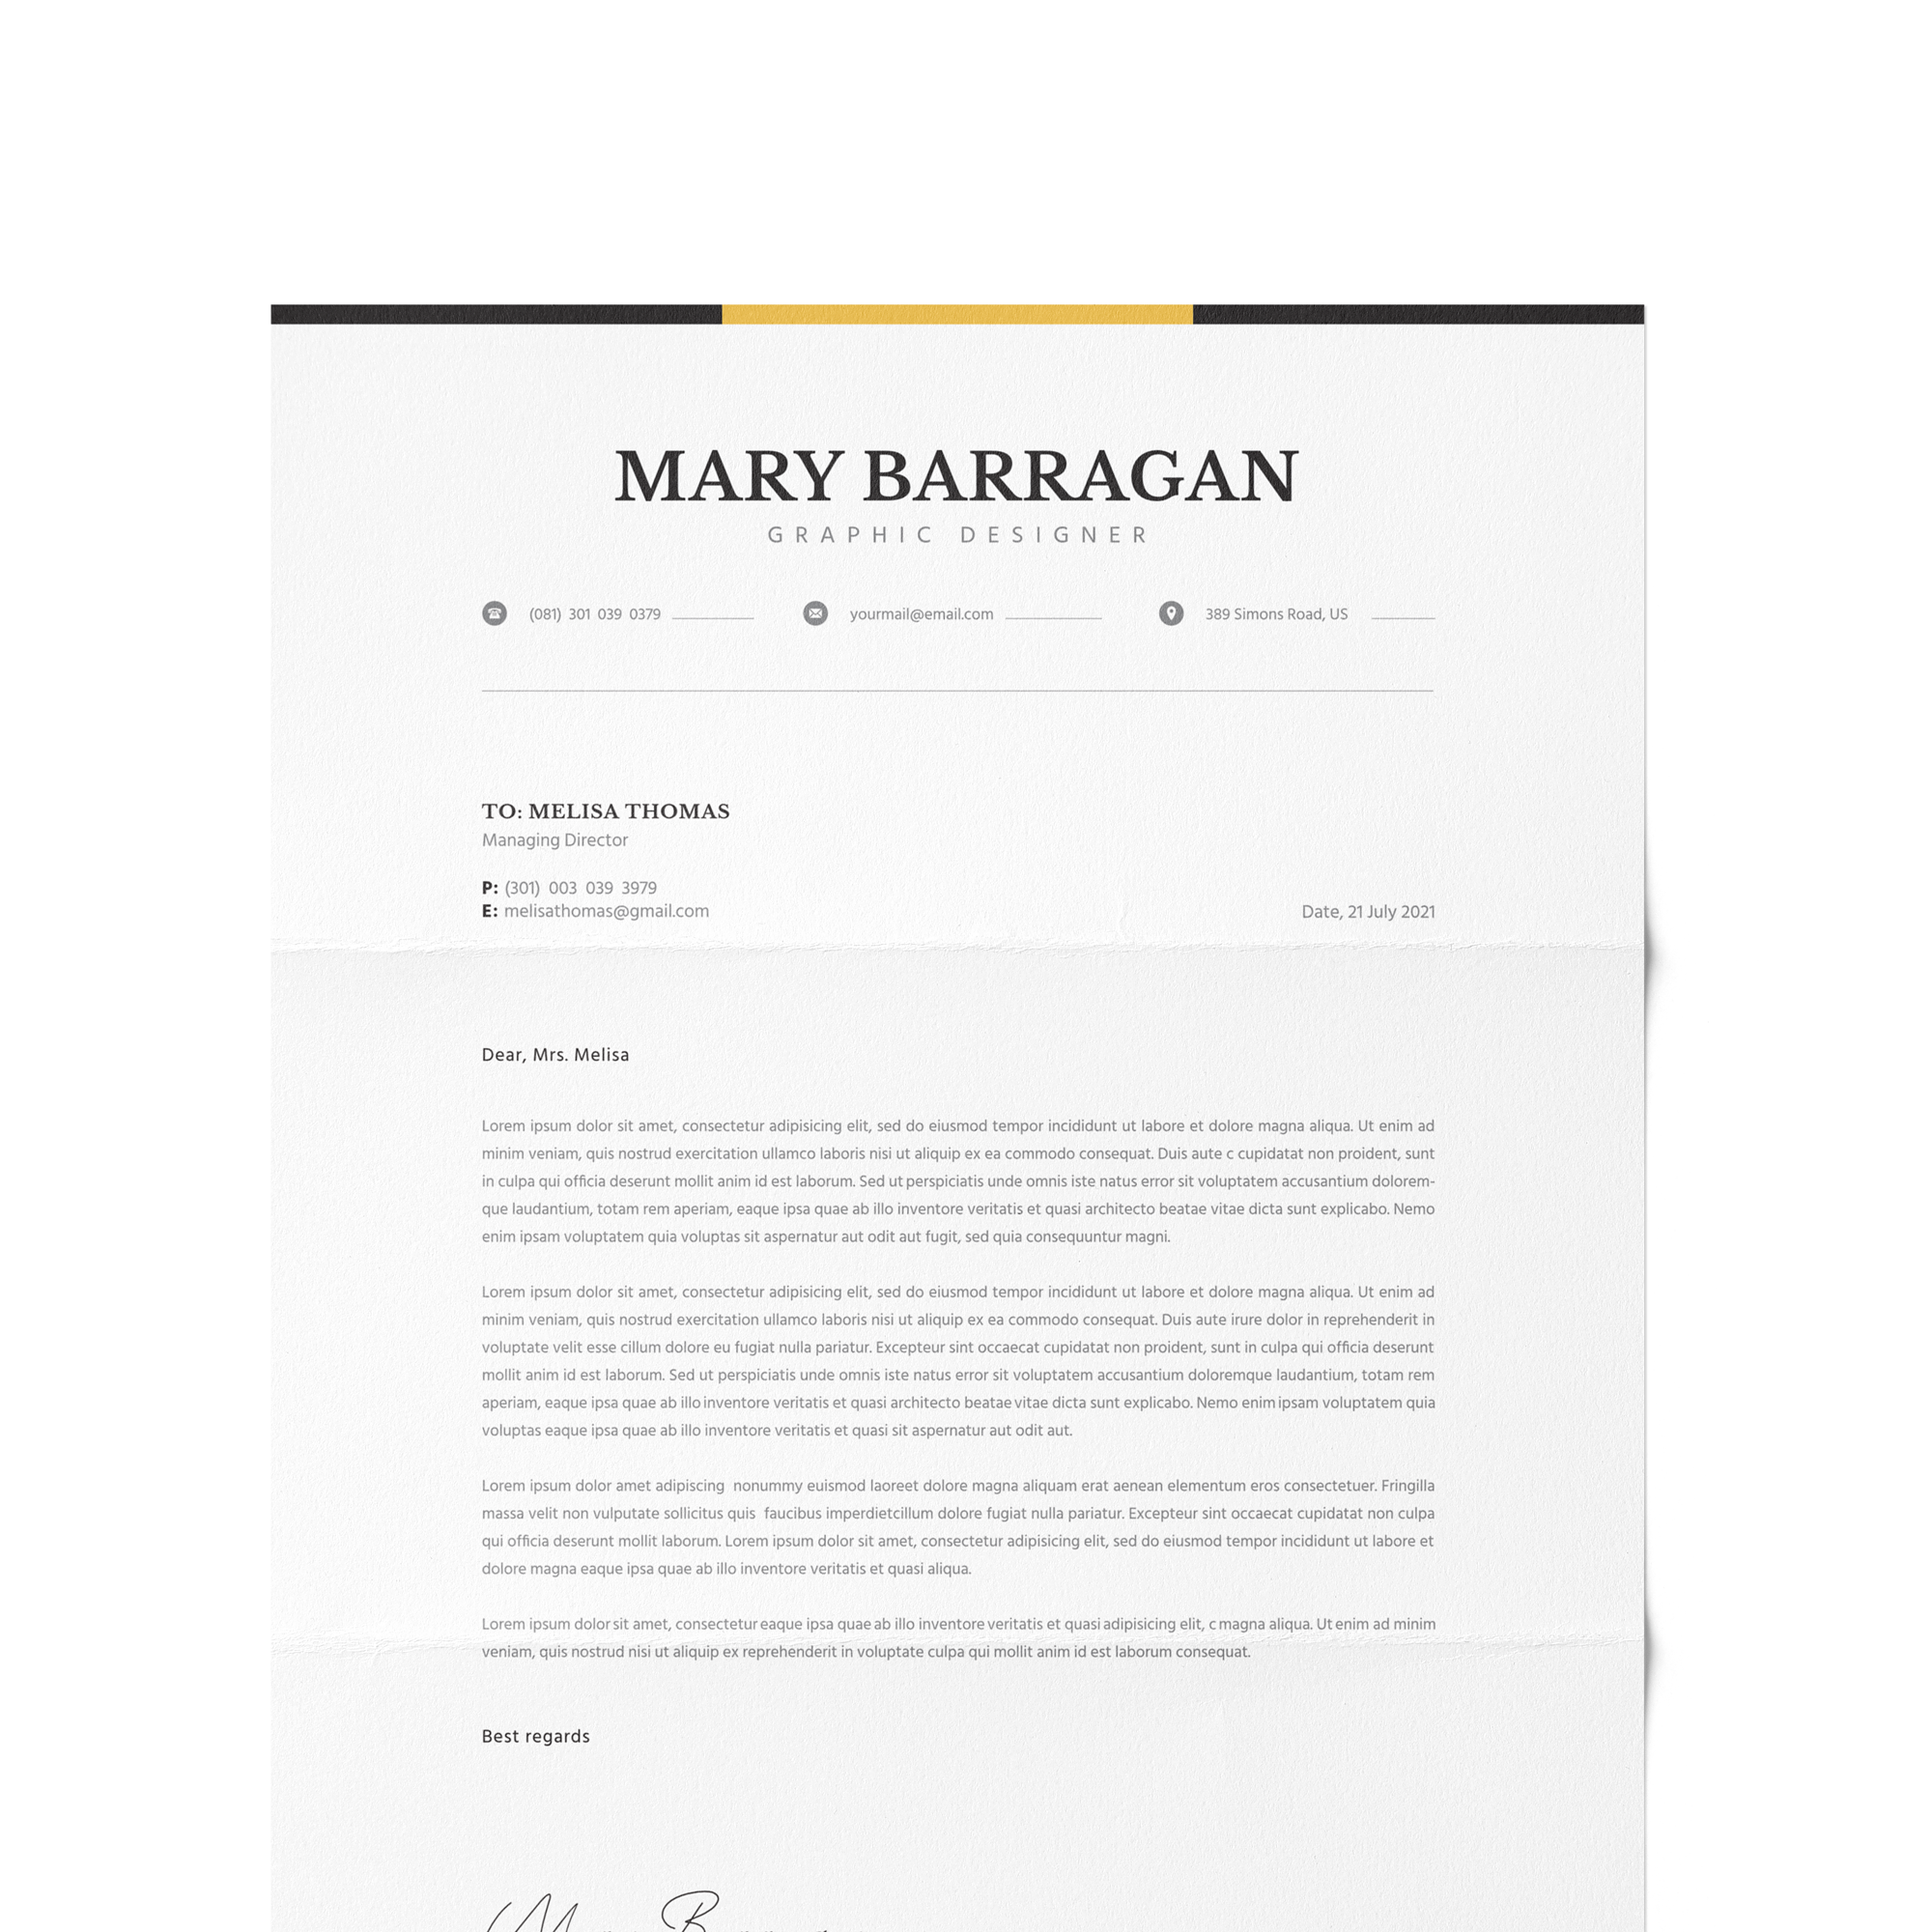 CV #88 Mary Barragan